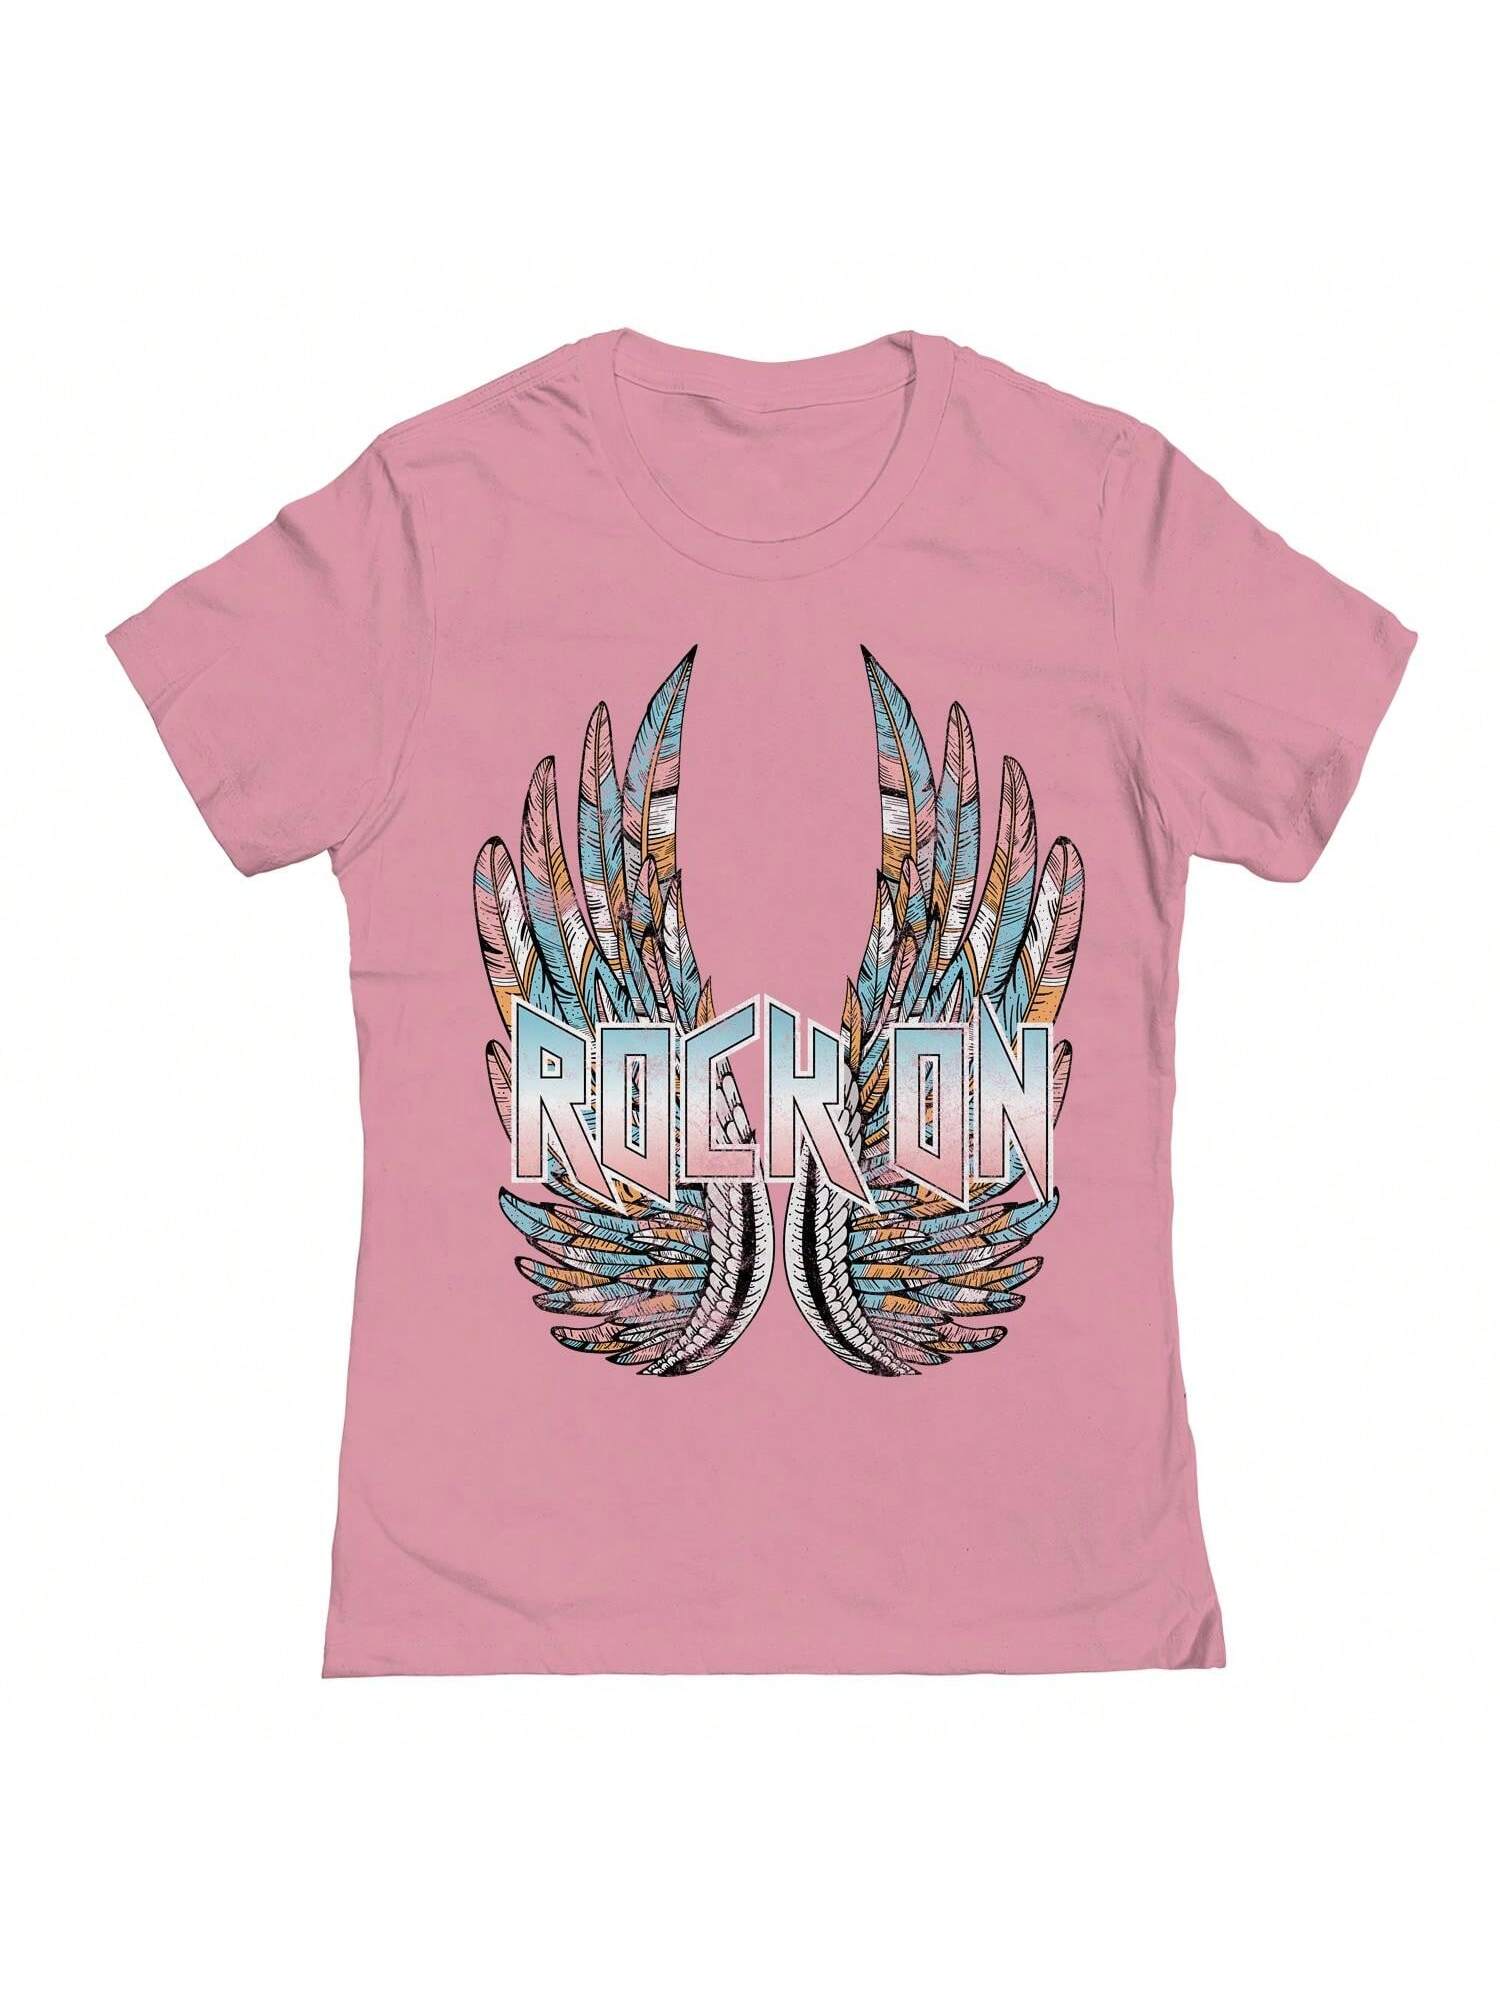 Женская хлопковая футболка с короткими рукавами Nearly There Rock On Graphic, розовый мужская хлопковая футболка с короткими рукавами country parks california state yose mite graphic sand бежевый